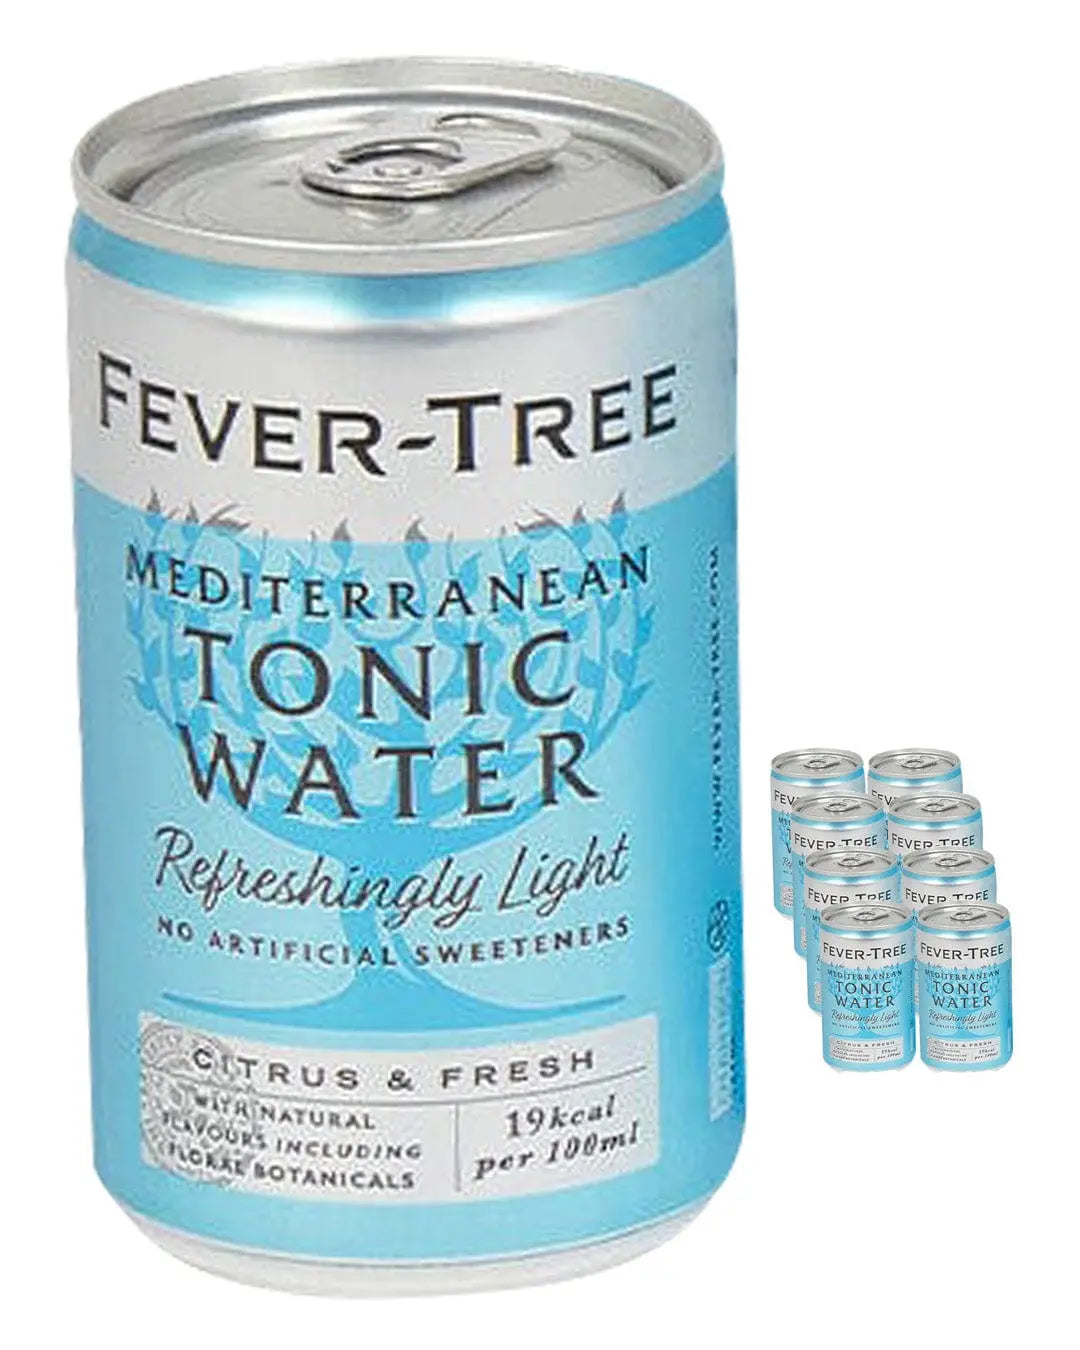 Fever-Tree Refreshingly Light Mediterranean Tonic Water Fridge Pack, 8 x 150 ml Tonics 05060108452144